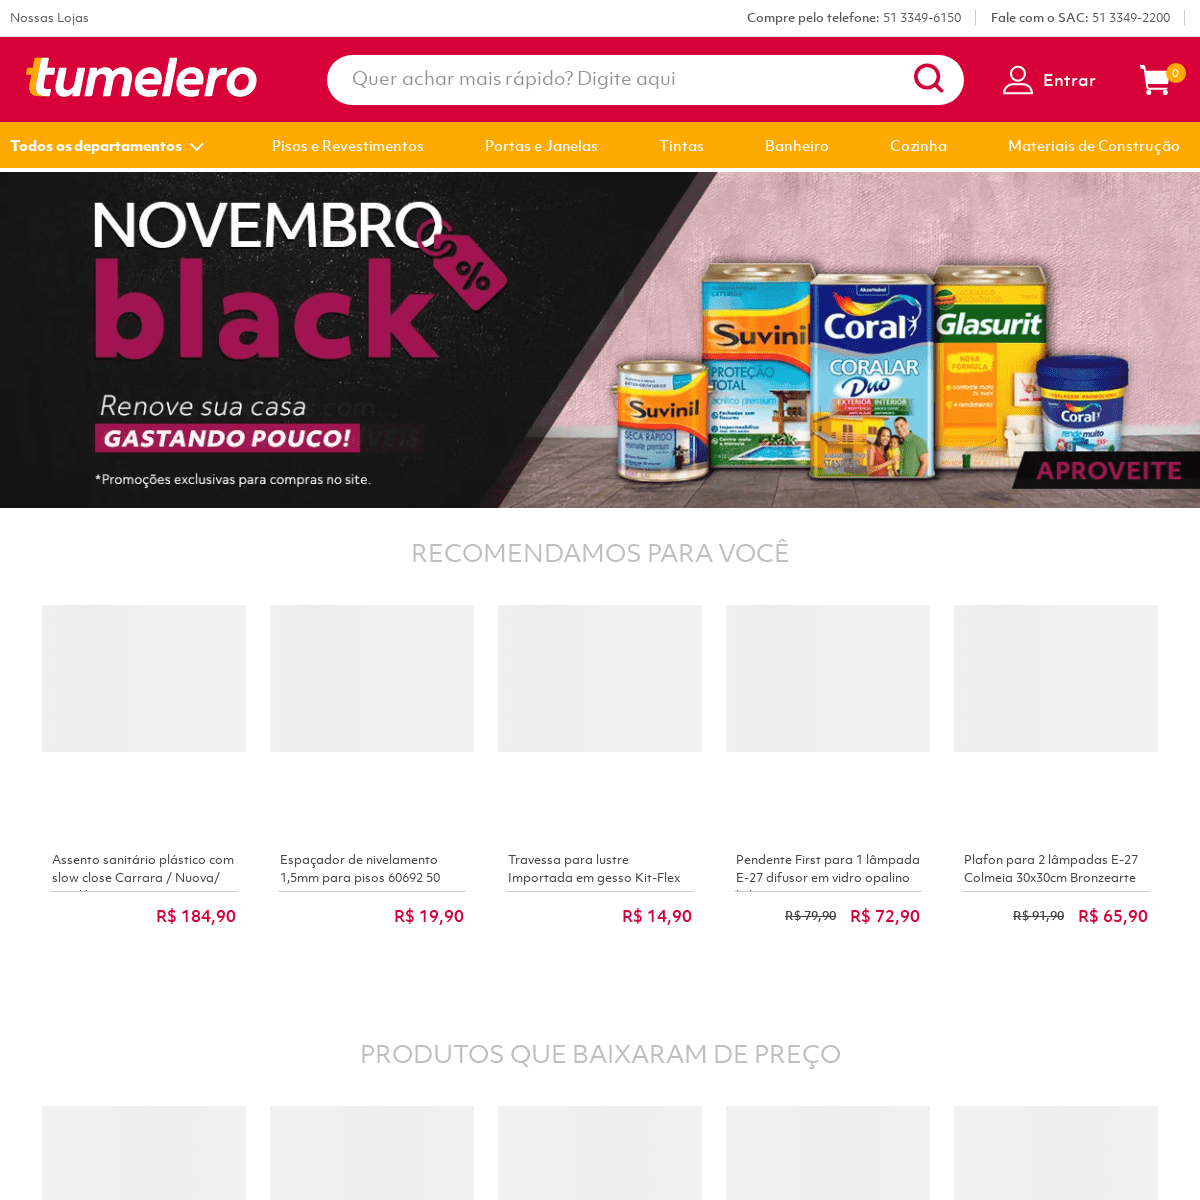 A complete backup of tumelero.com.br